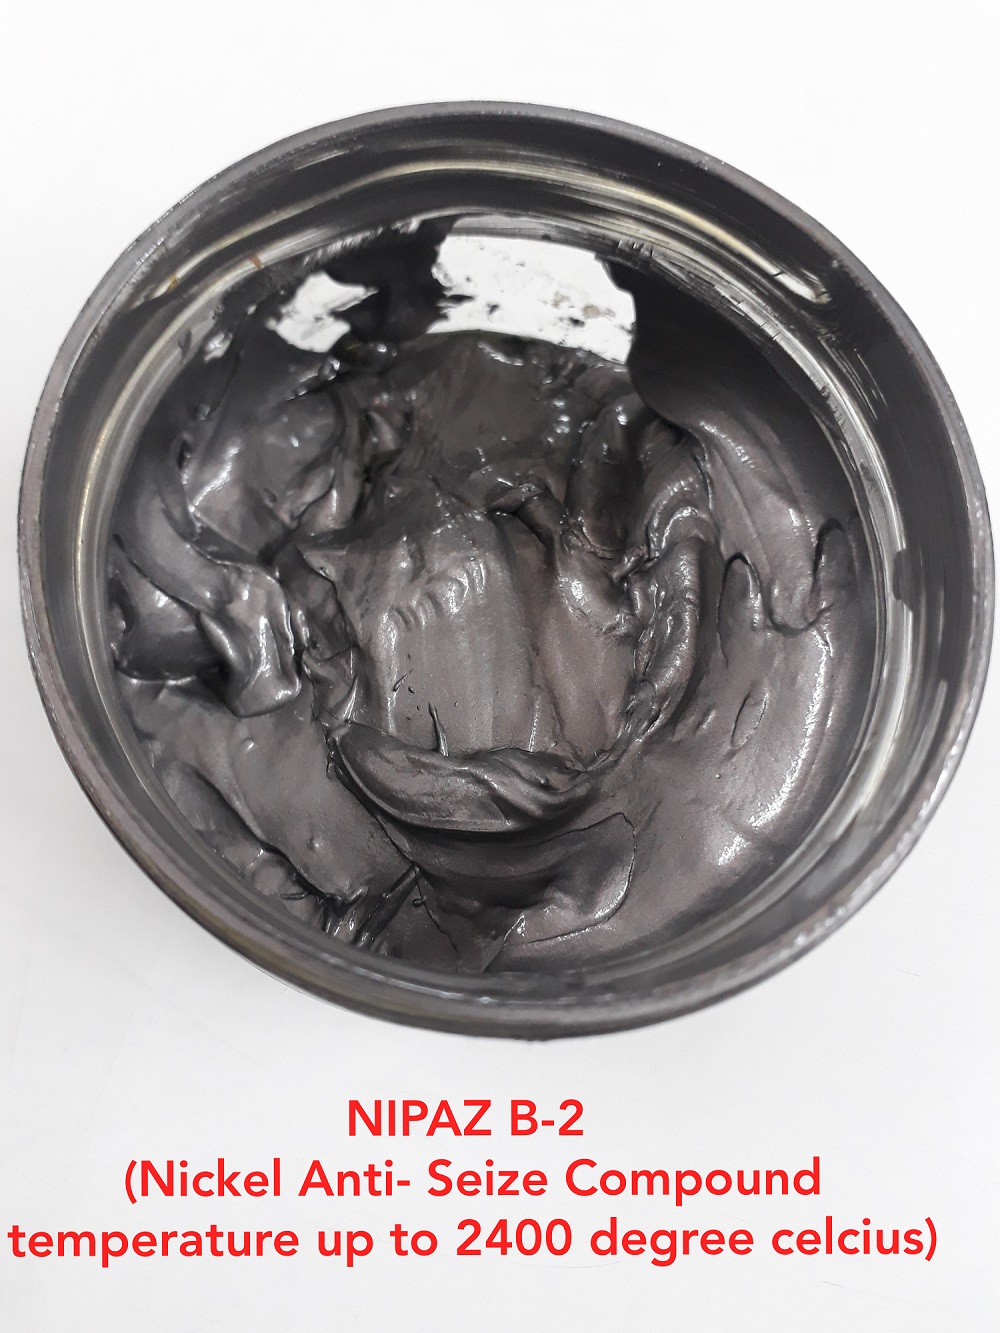 NIPAZ-B2 (Nickel Anti-Seize Compound Thread)